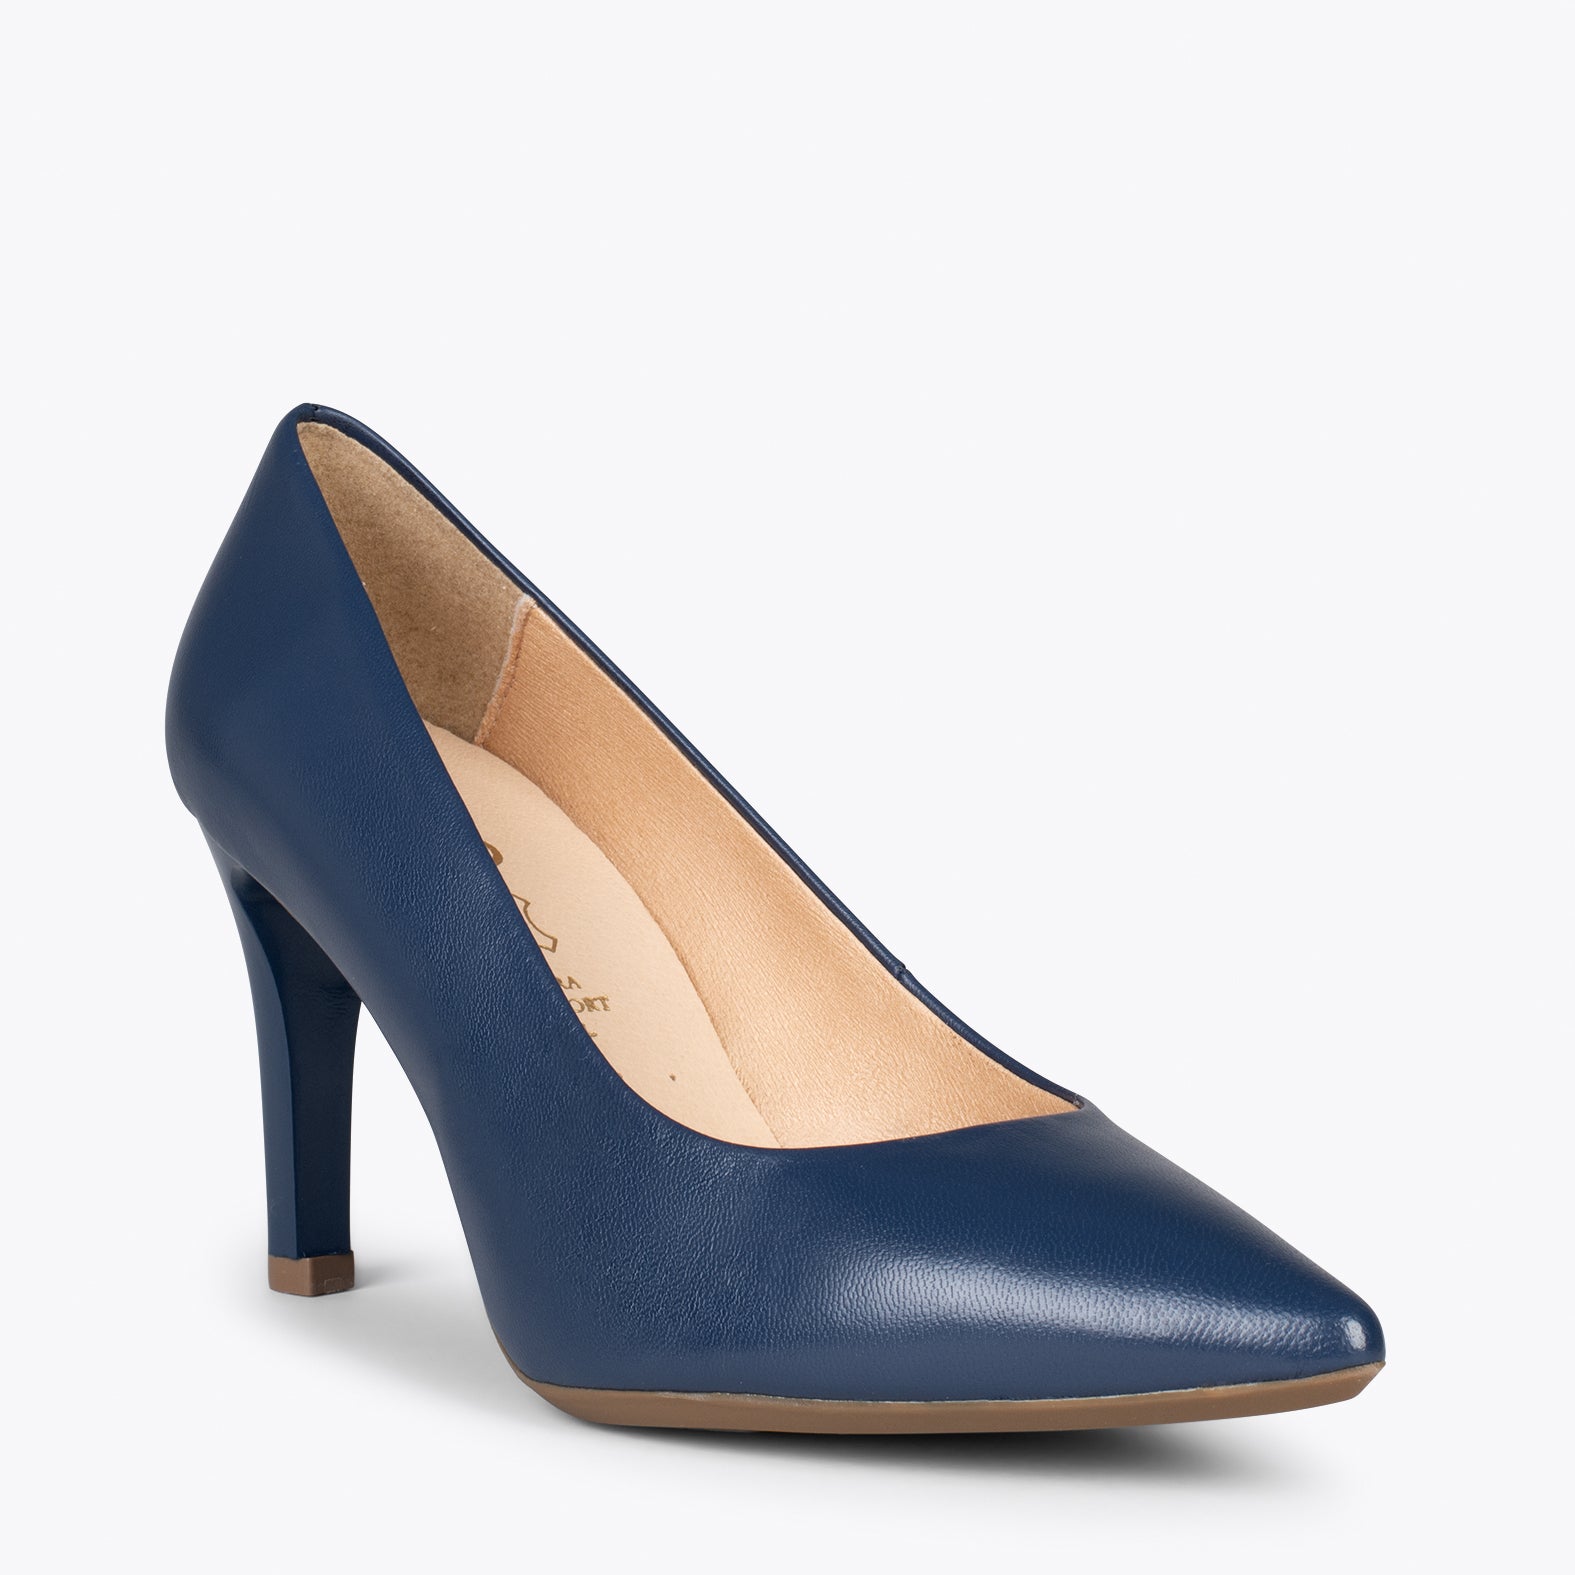 GLAM – NAVY elegant high heels